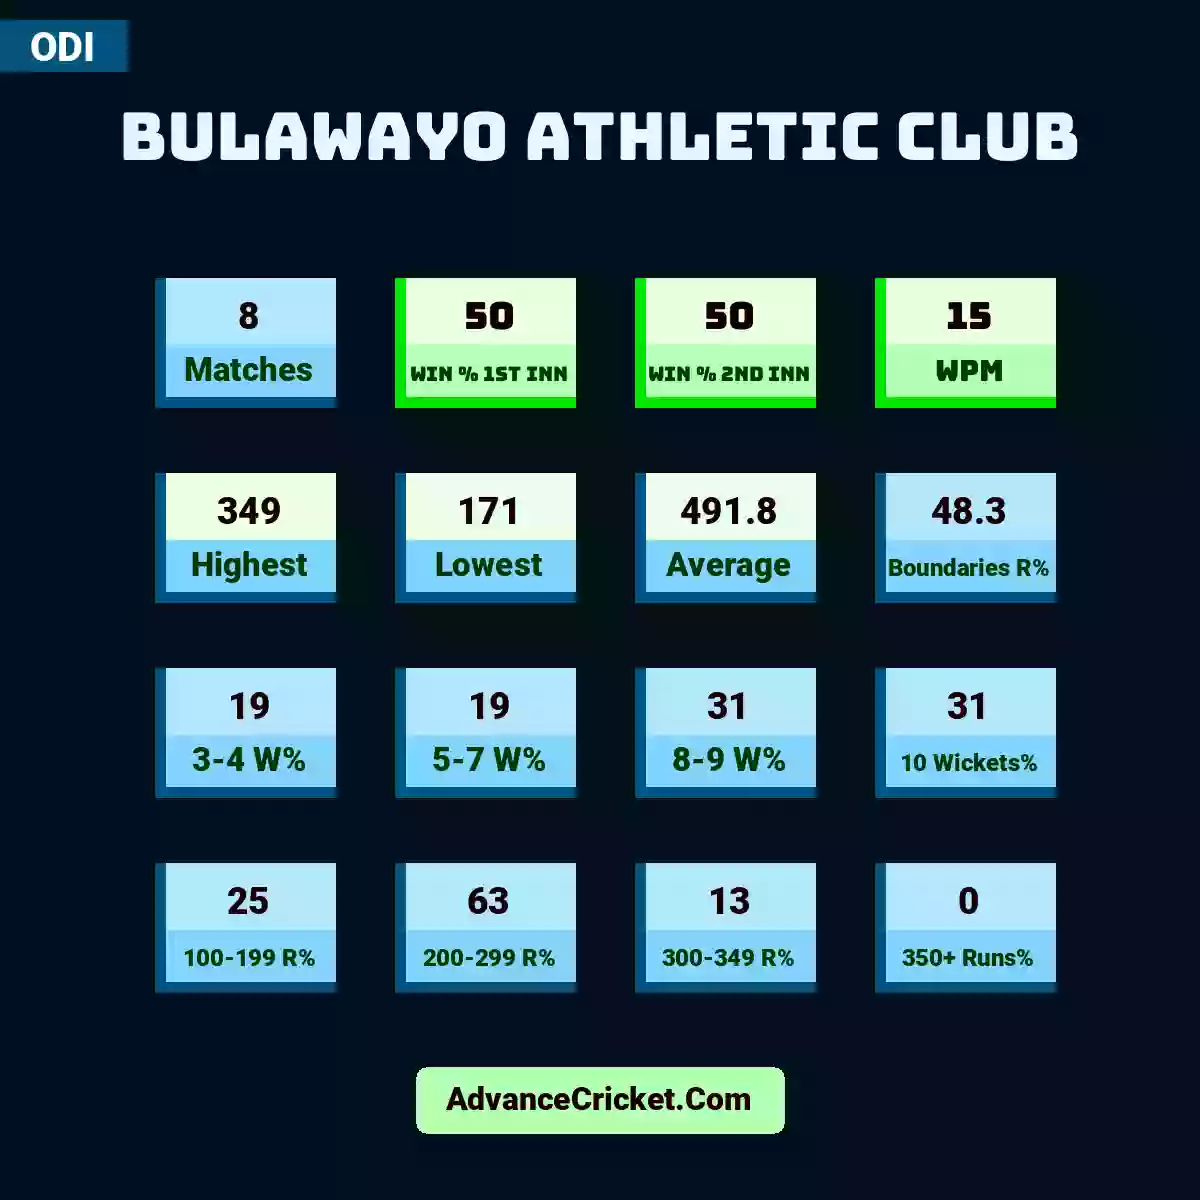 Image showing Bulawayo Athletic Club with Matches: 8, Win % 1st Inn: 50, Win % 2nd Inn: 50, WPM: 15, Highest: 349, Lowest: 171, Average: 491.8, Boundaries R%: 48.3, 3-4 W%: 19, 5-7 W%: 19, 8-9 W%: 31, 10 Wickets%: 31, 100-199 R%: 25, 200-299 R%: 63, 300-349 R%: 13, 350+ Runs%: 0.